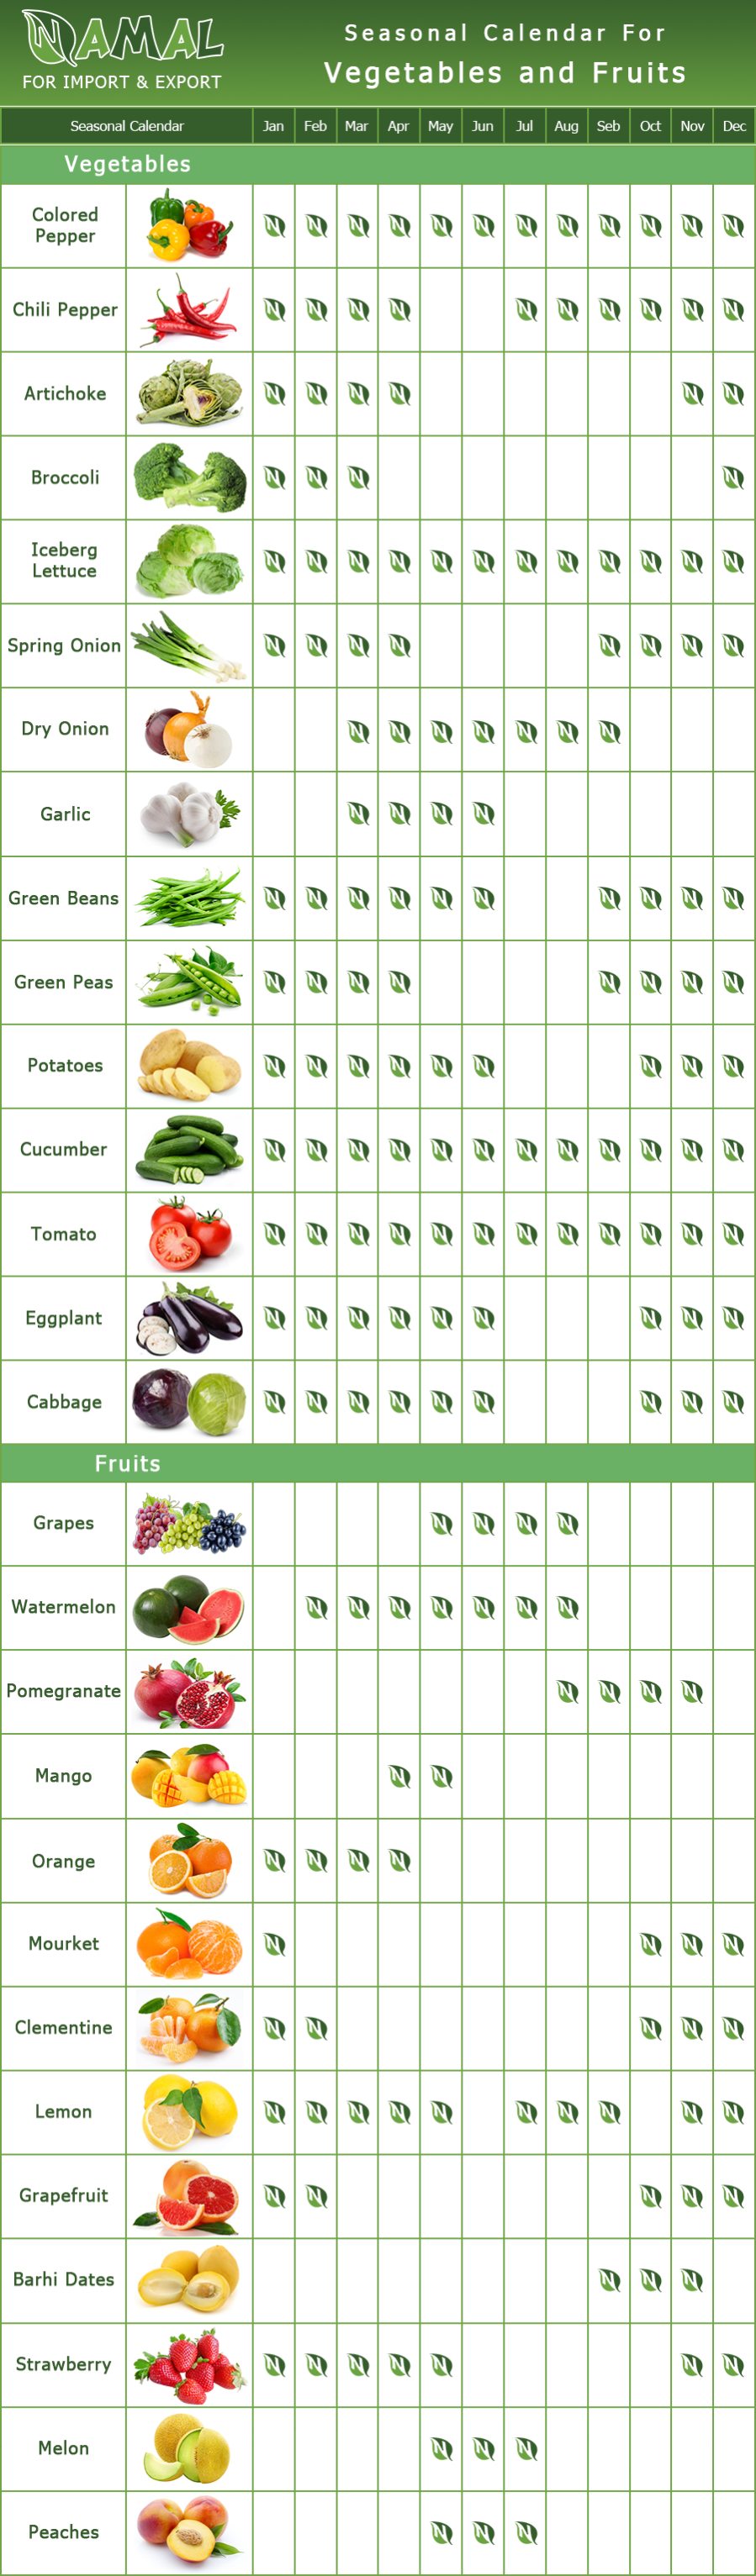 Seasonal Calendar For Vegetables and Fruits